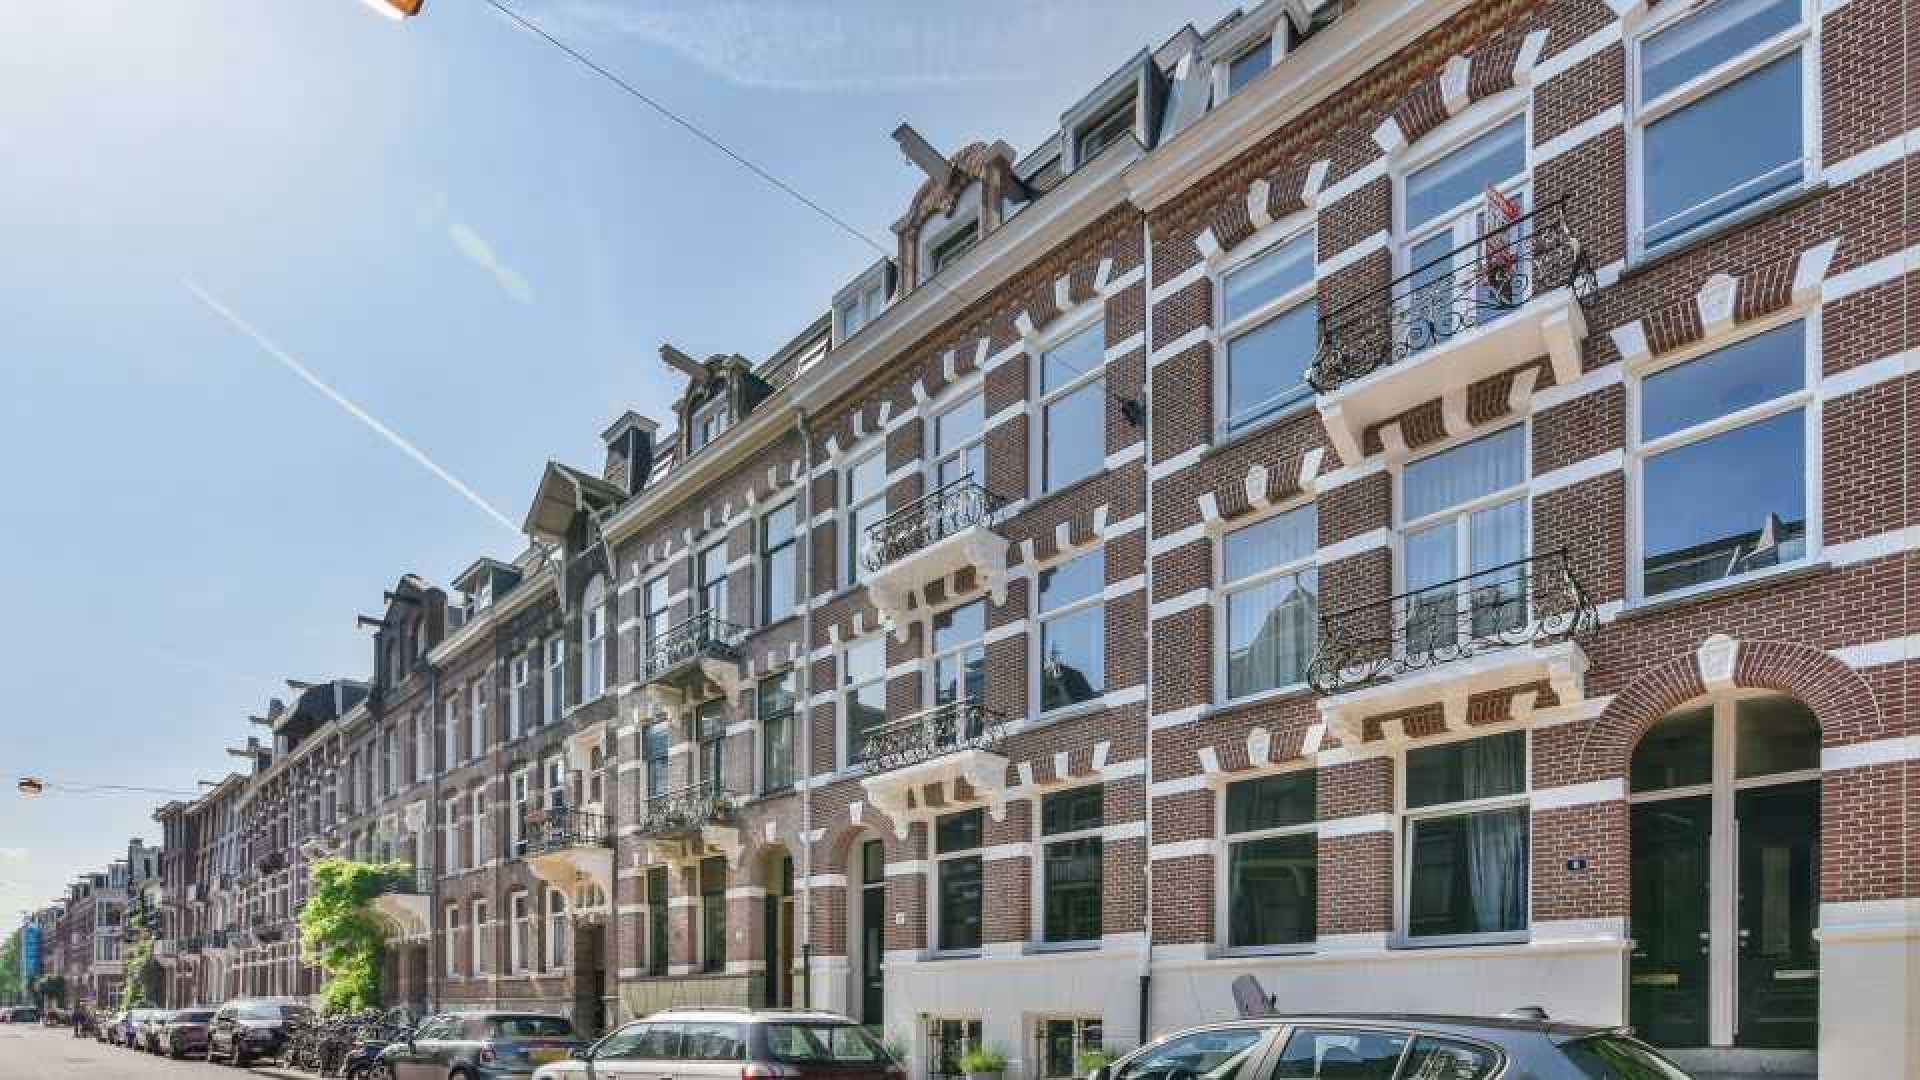 Ajax voetballer Dusan Tadic koopt miljoenen pand in Amsterdam Oud Zuid. 1